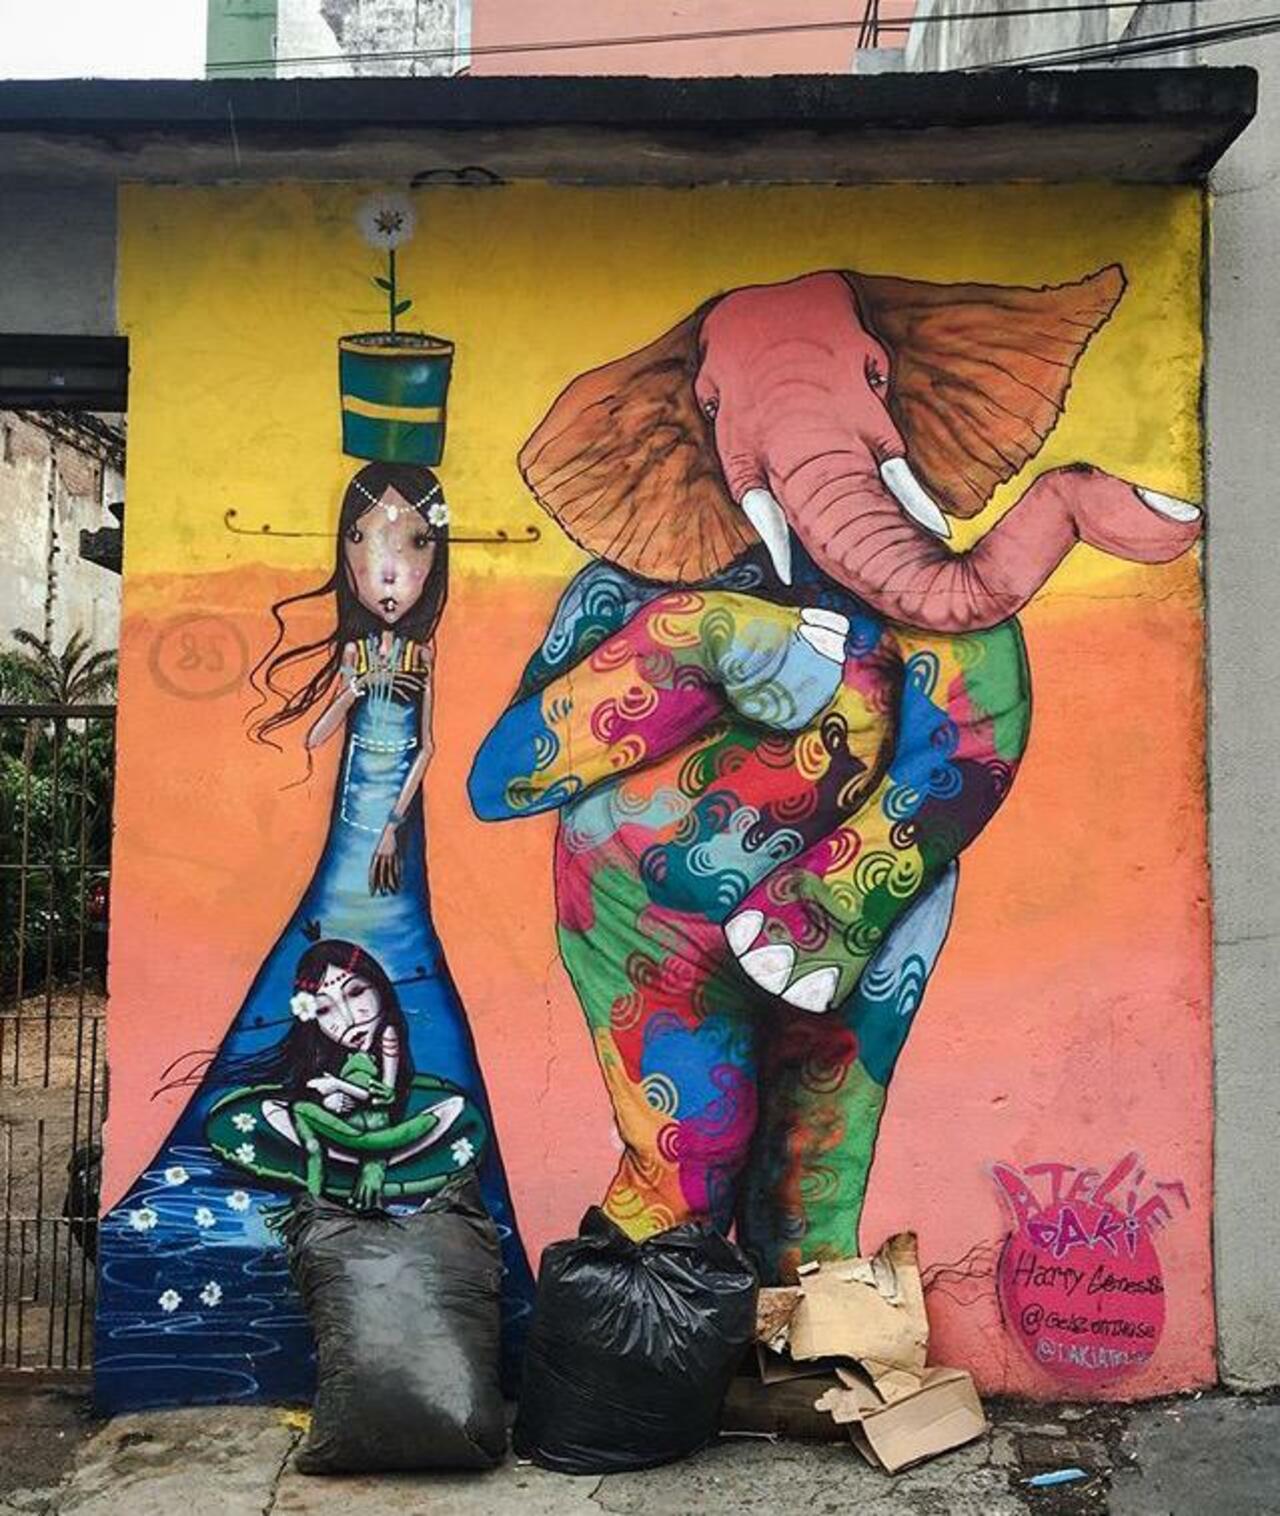 Street Art by Harry Geneis & Gelson in São Paulo 

#art #mural #graffiti #streetart http://t.co/HvLfsSpwZf